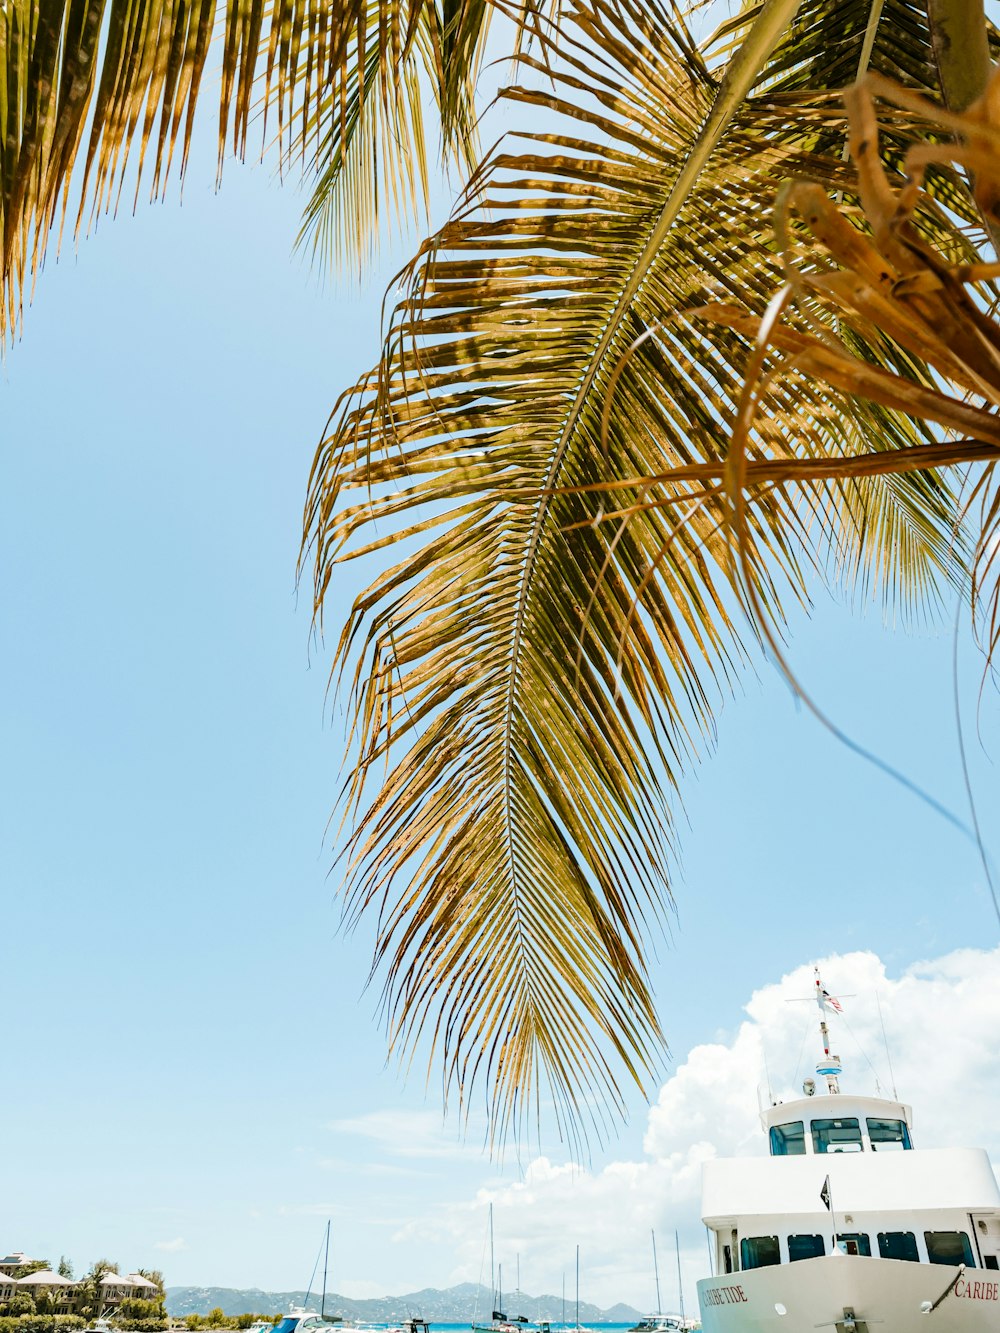 green palm tree near white ship during daytime